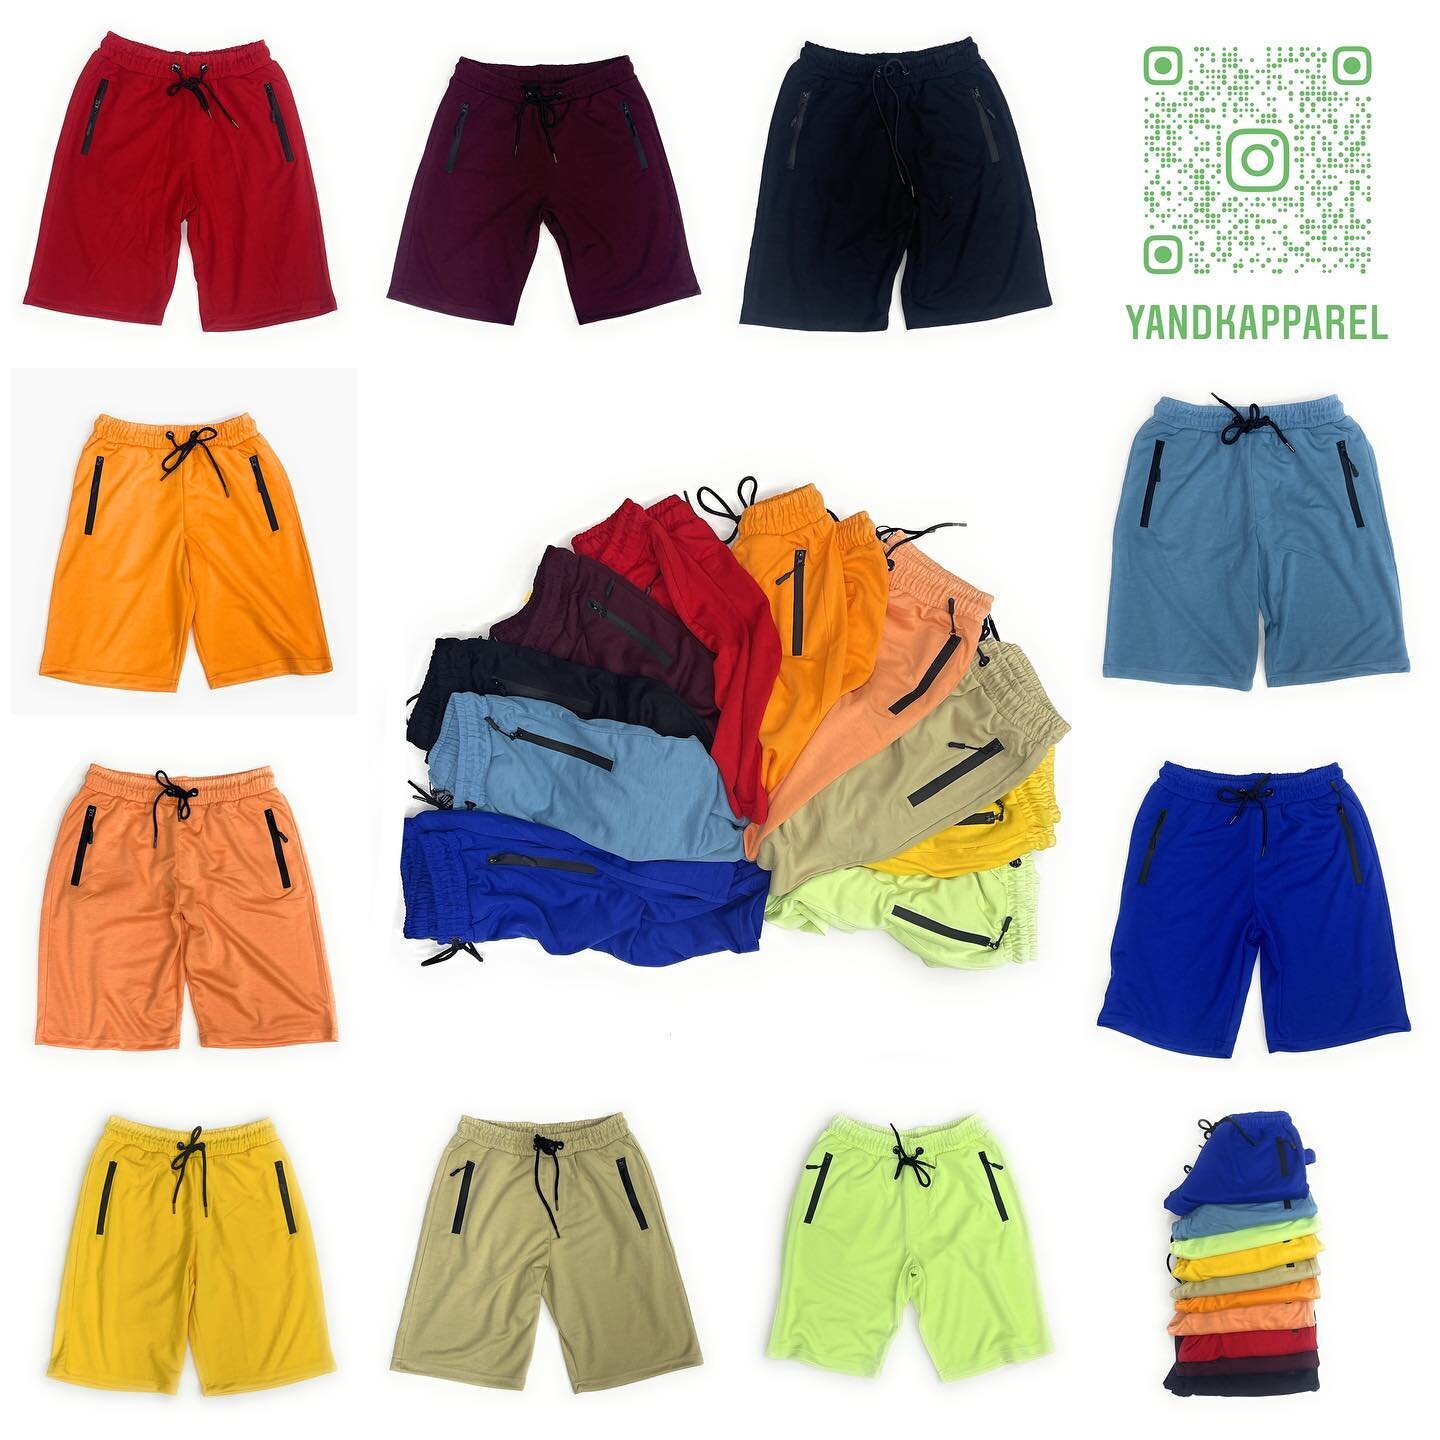 Solid Tech Fleece Shorts in Multiple colors 

#wholesale #retail #yandkapparel #newyorkfashion #newyork #mensfashion #streetfashion #instore #onlineshopping #summervibes #summerfashion #spring #shorts #springfashion